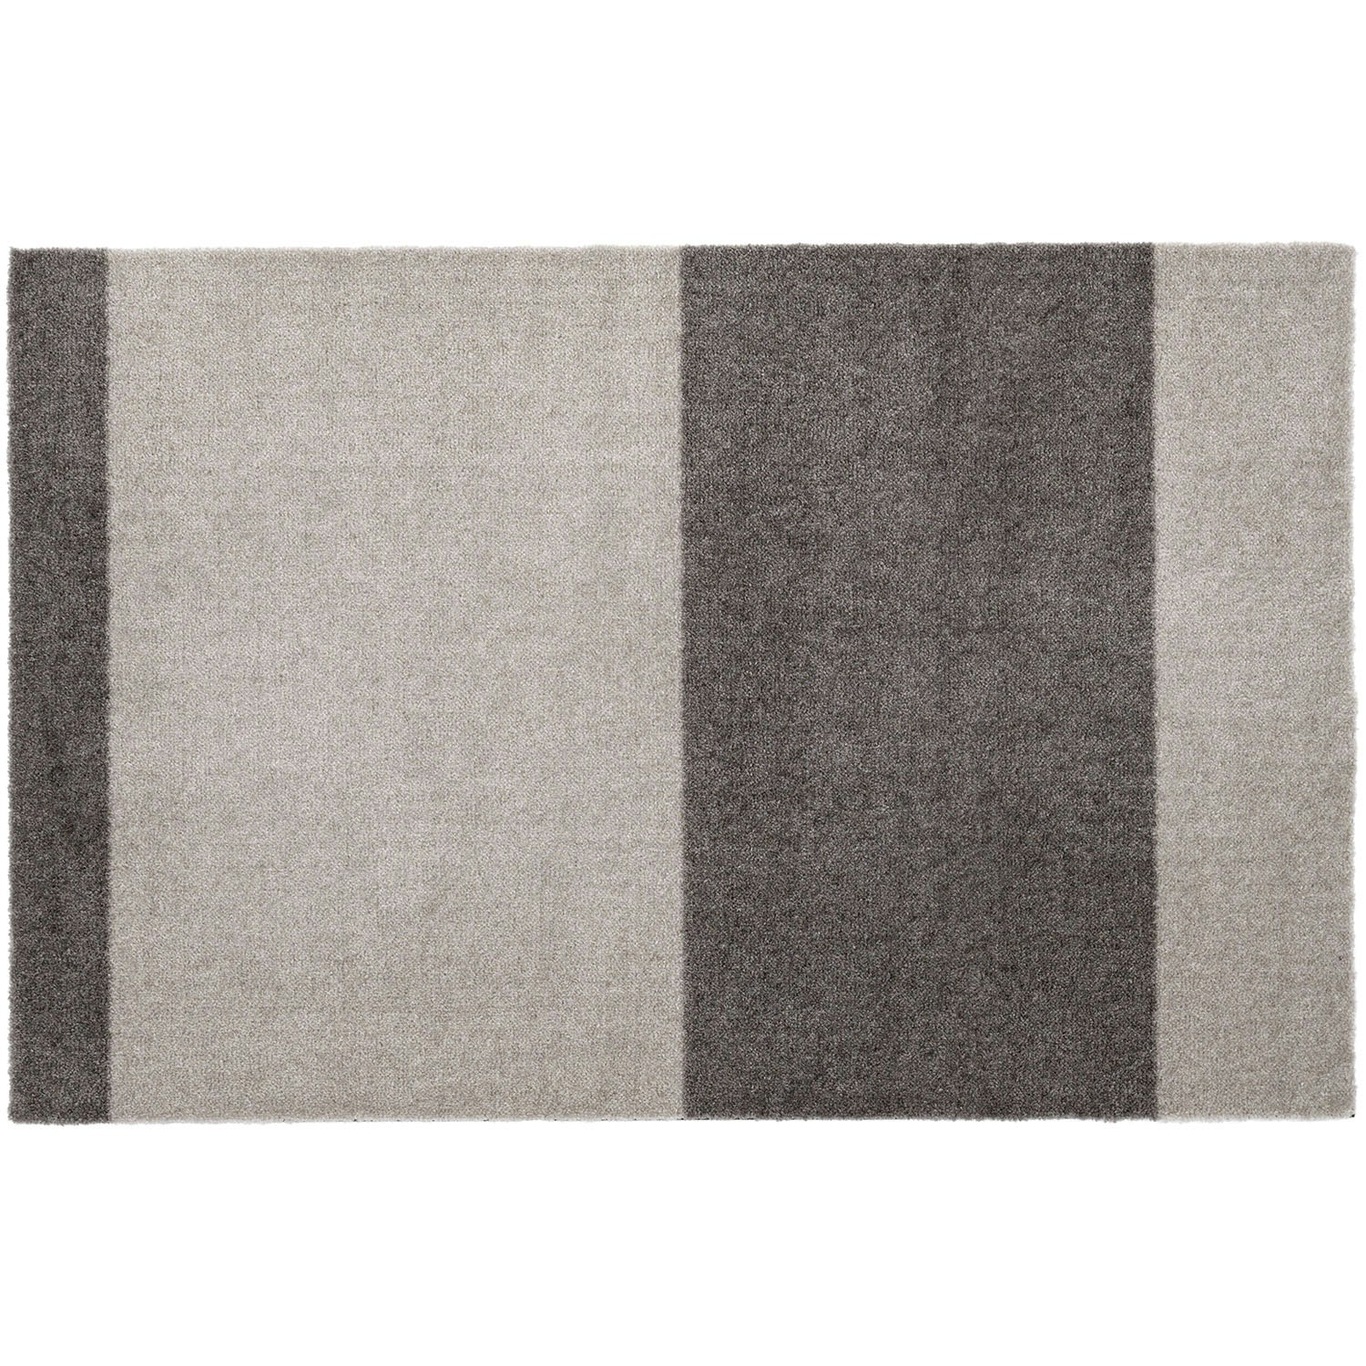 Stripes Vloerkleed Steel Grey / Lichtgrijs, 60x90 cm